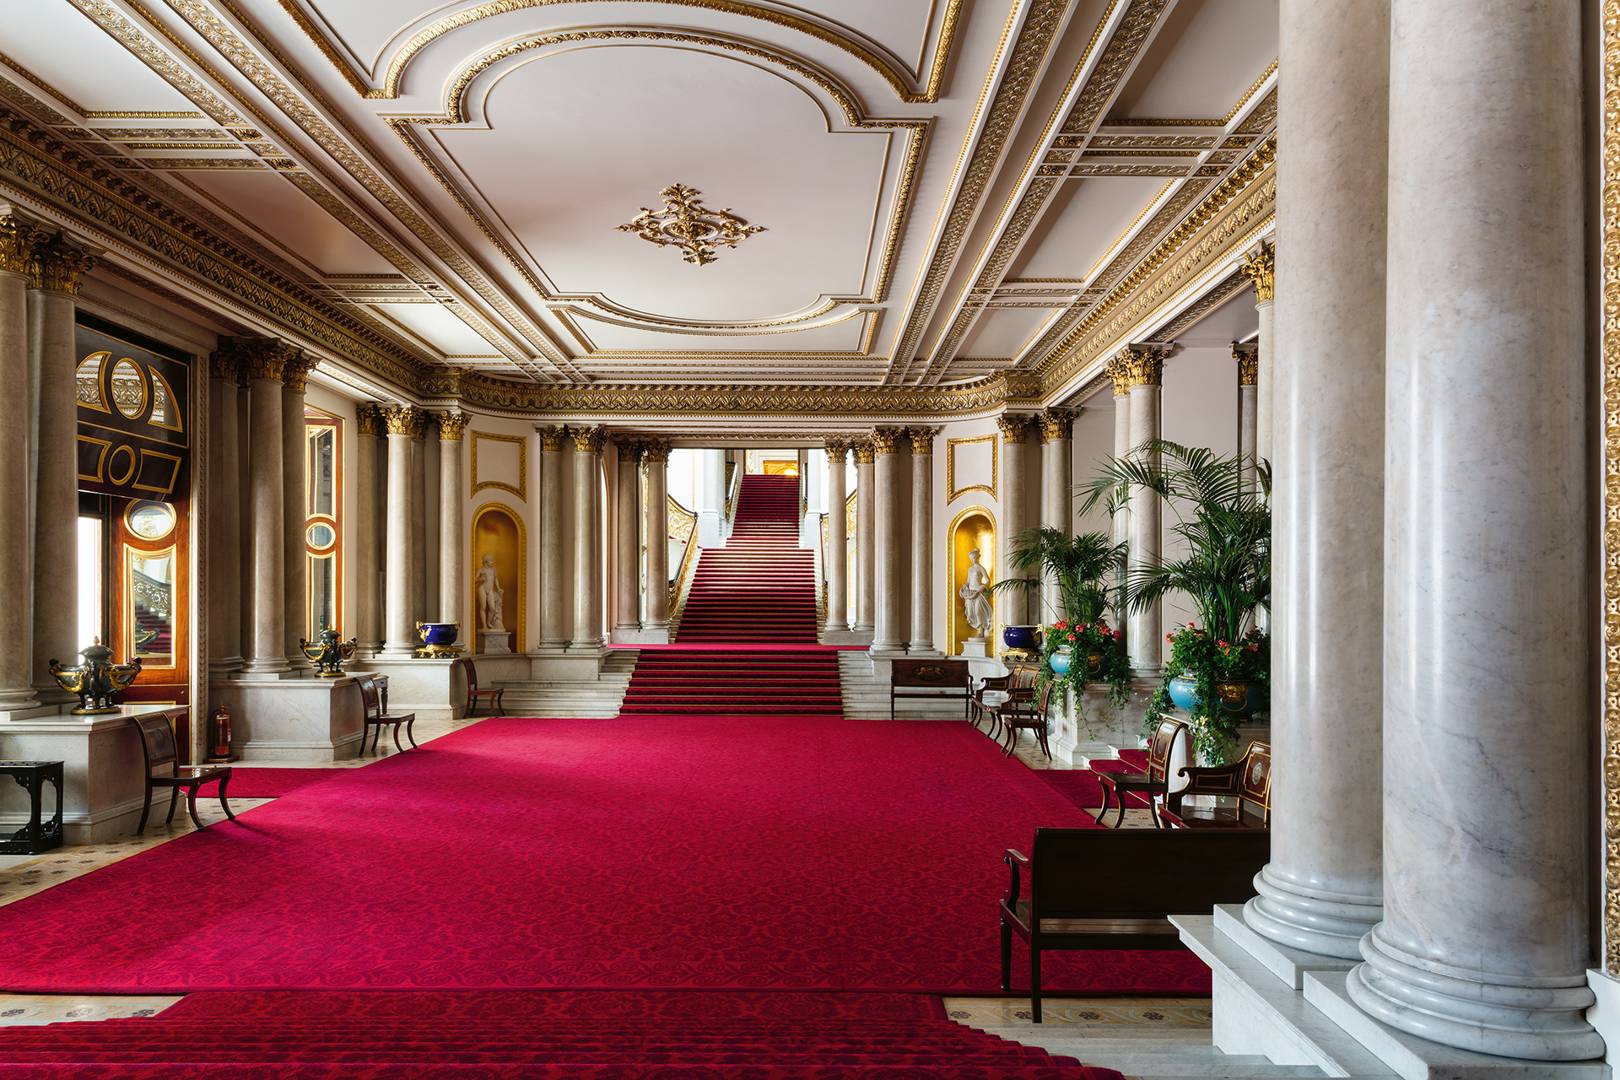 A Look Inside Buckingham Palace And Its Extraordinary